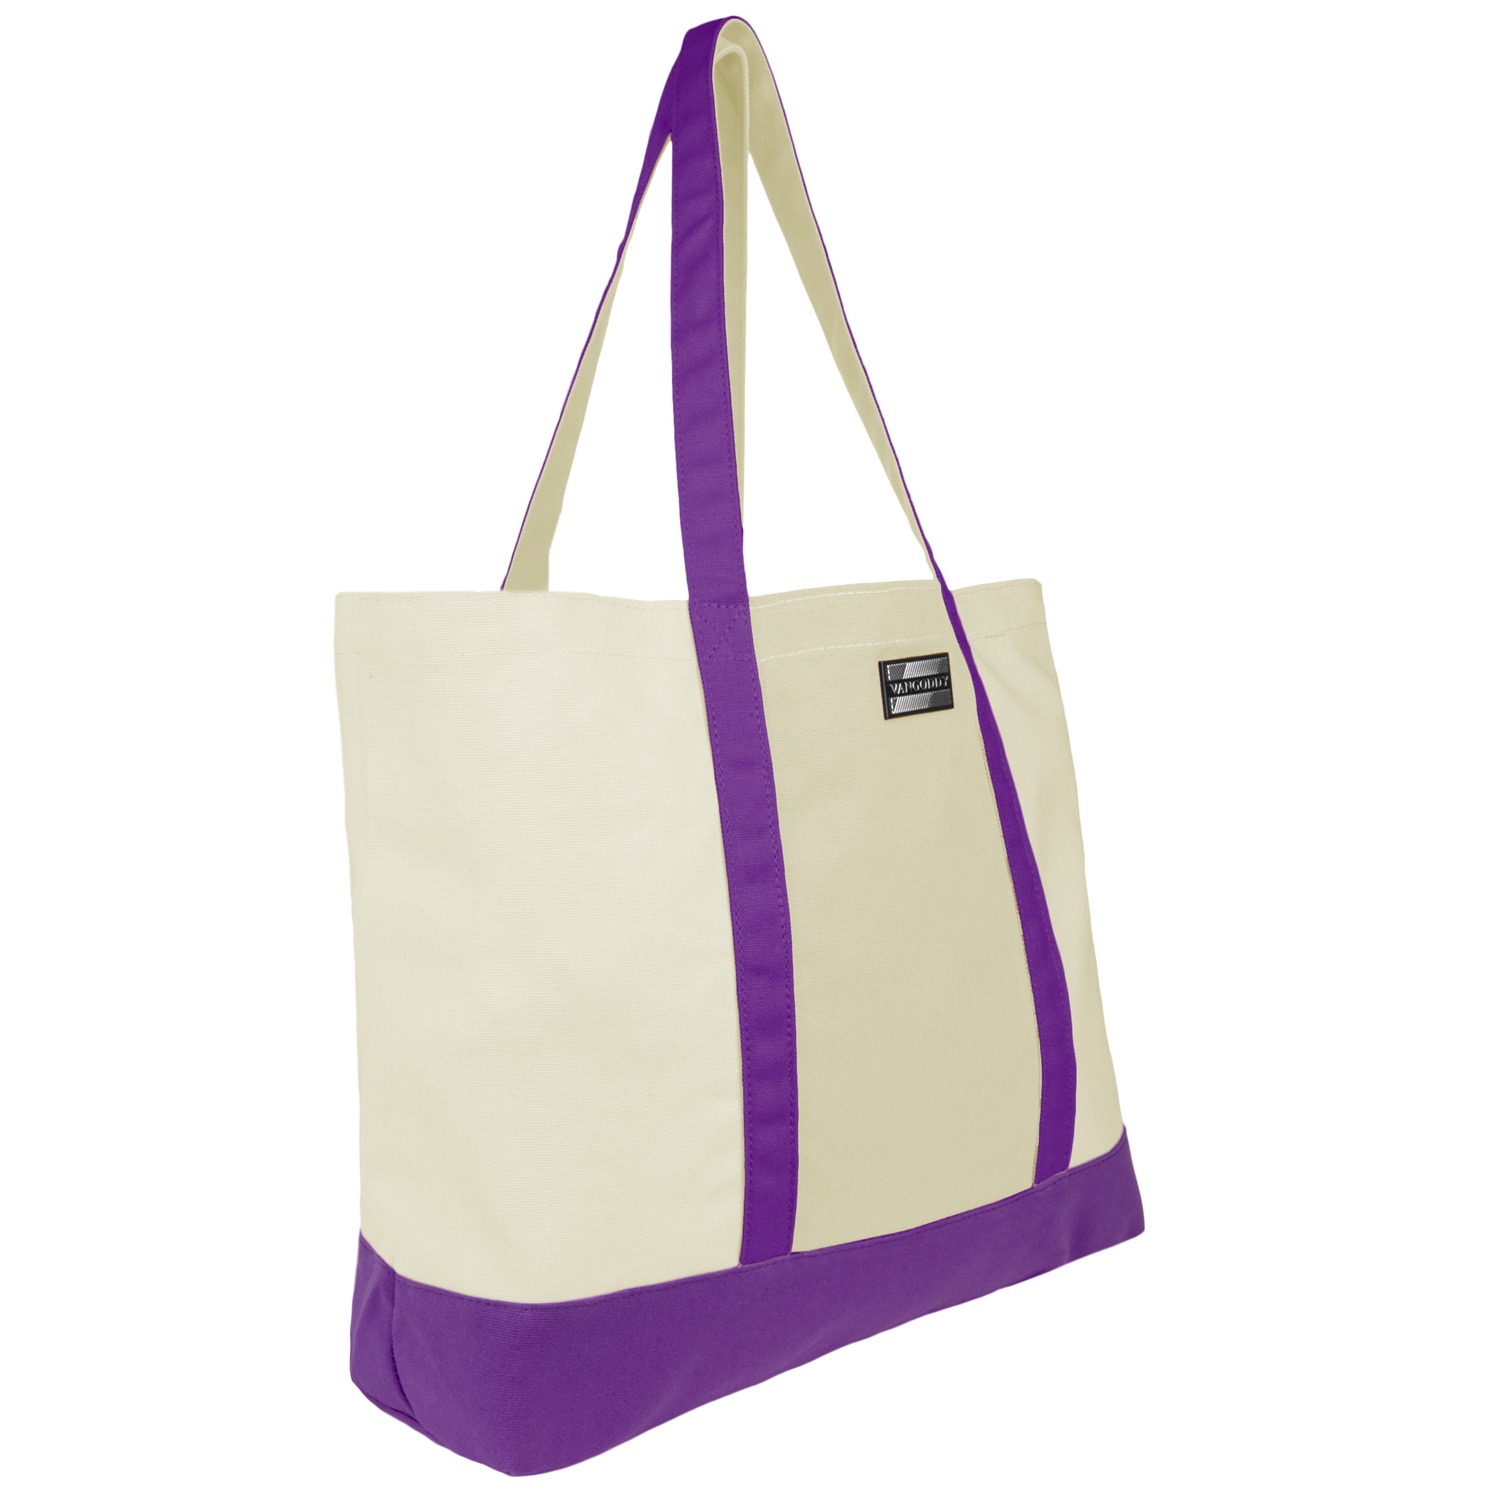 Isling Tote Bag (Natural/Purple)